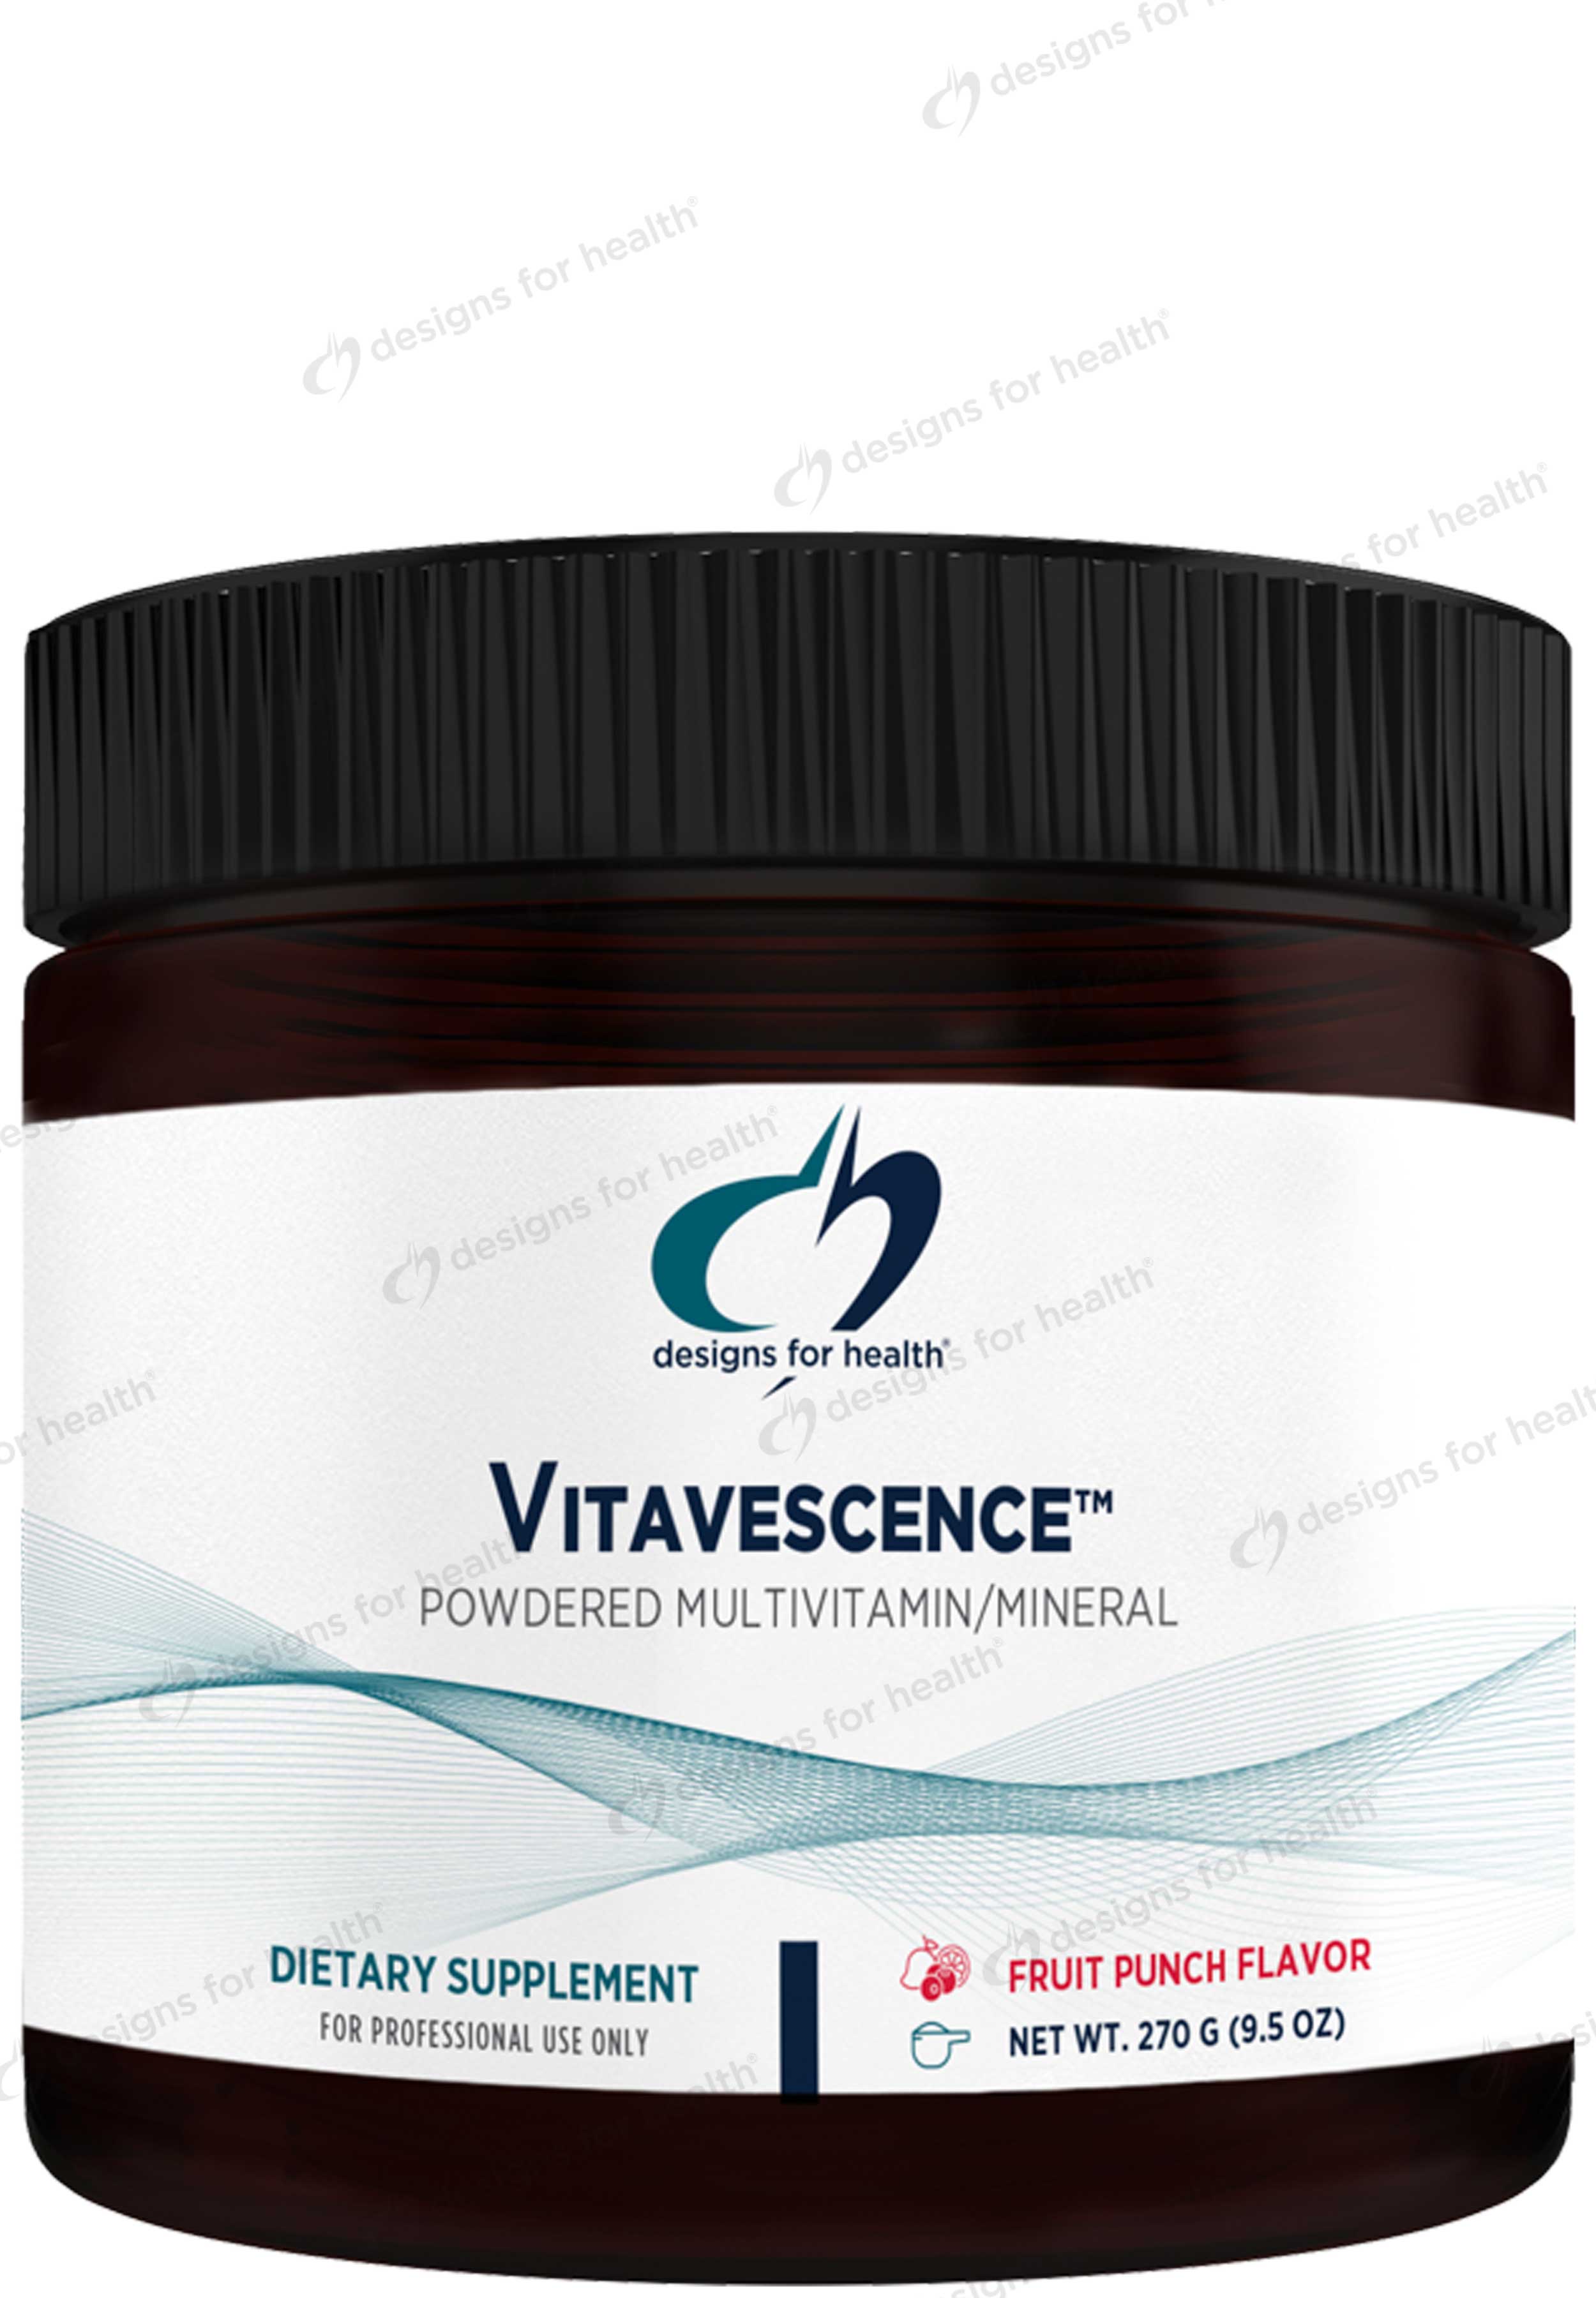 Designs for Health Vitavescence